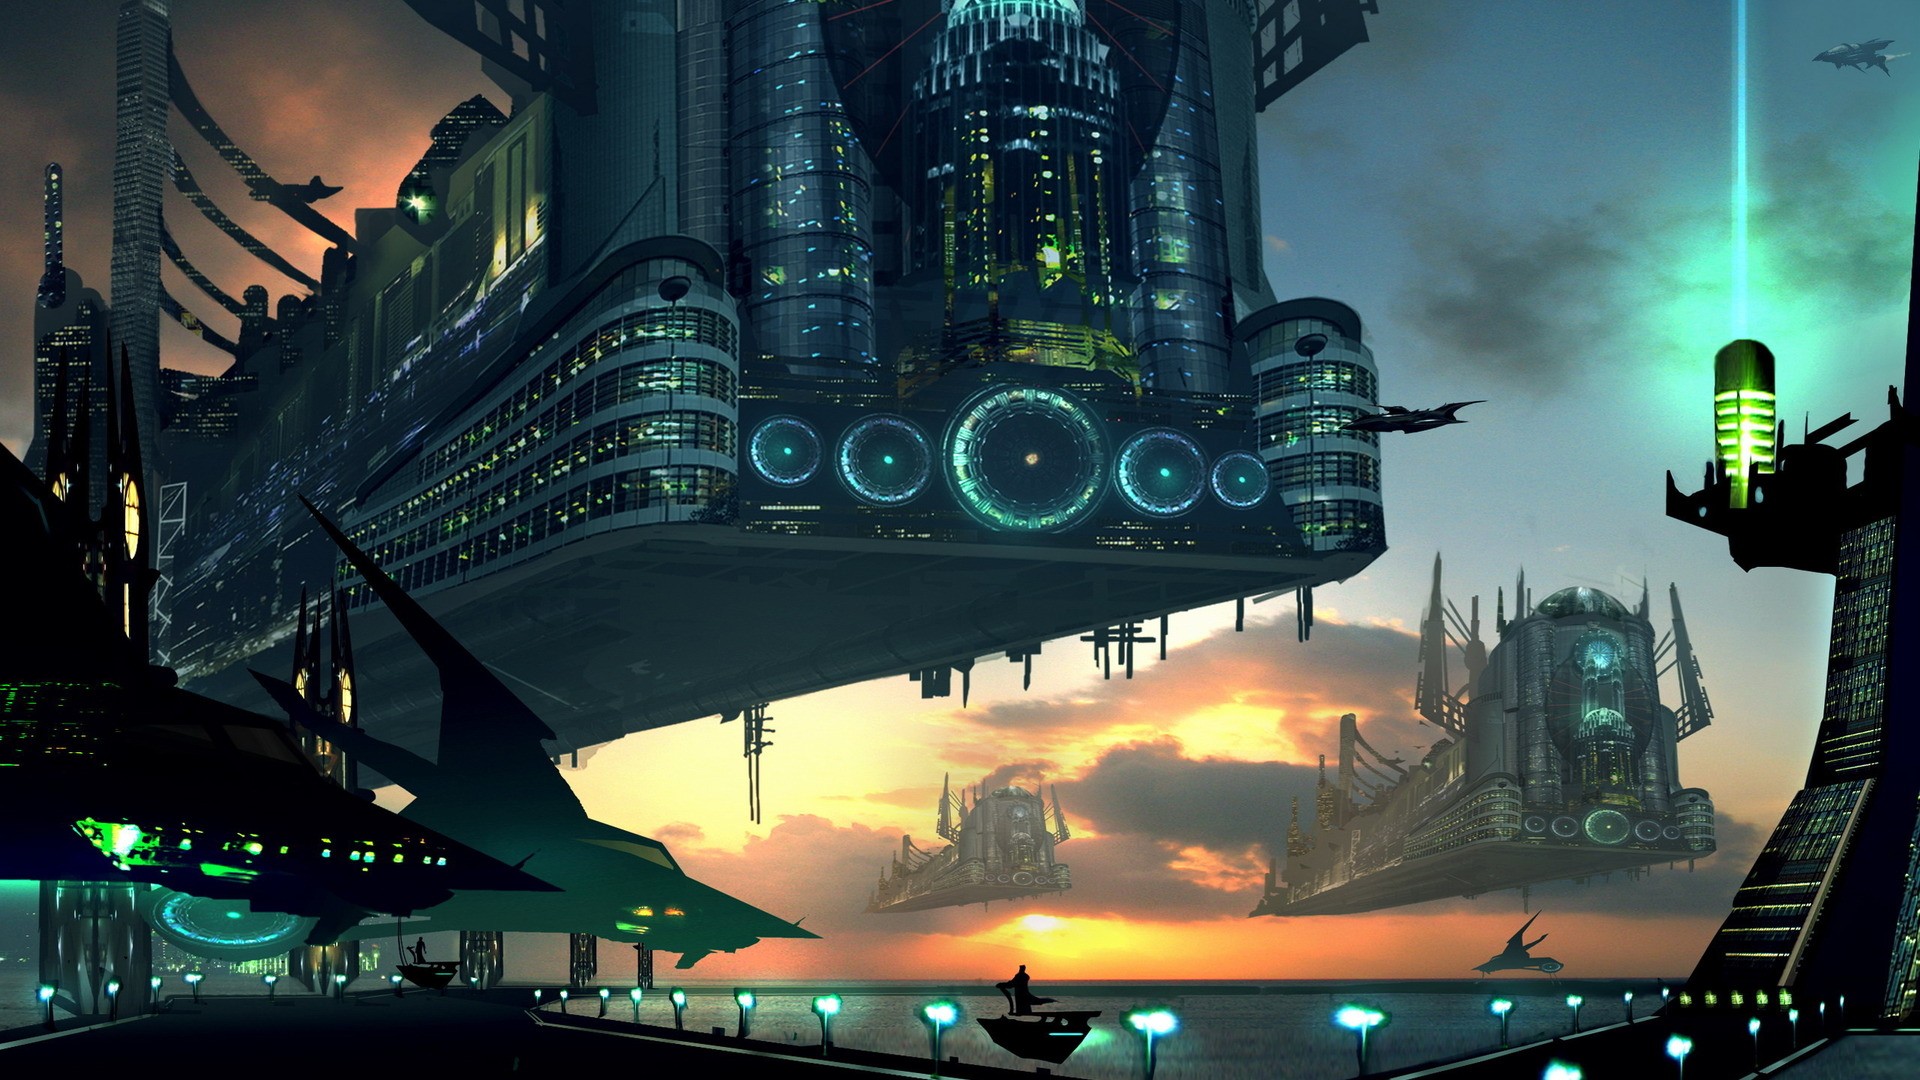 futuristic, Spaceship, Fantasy art Wallpaper